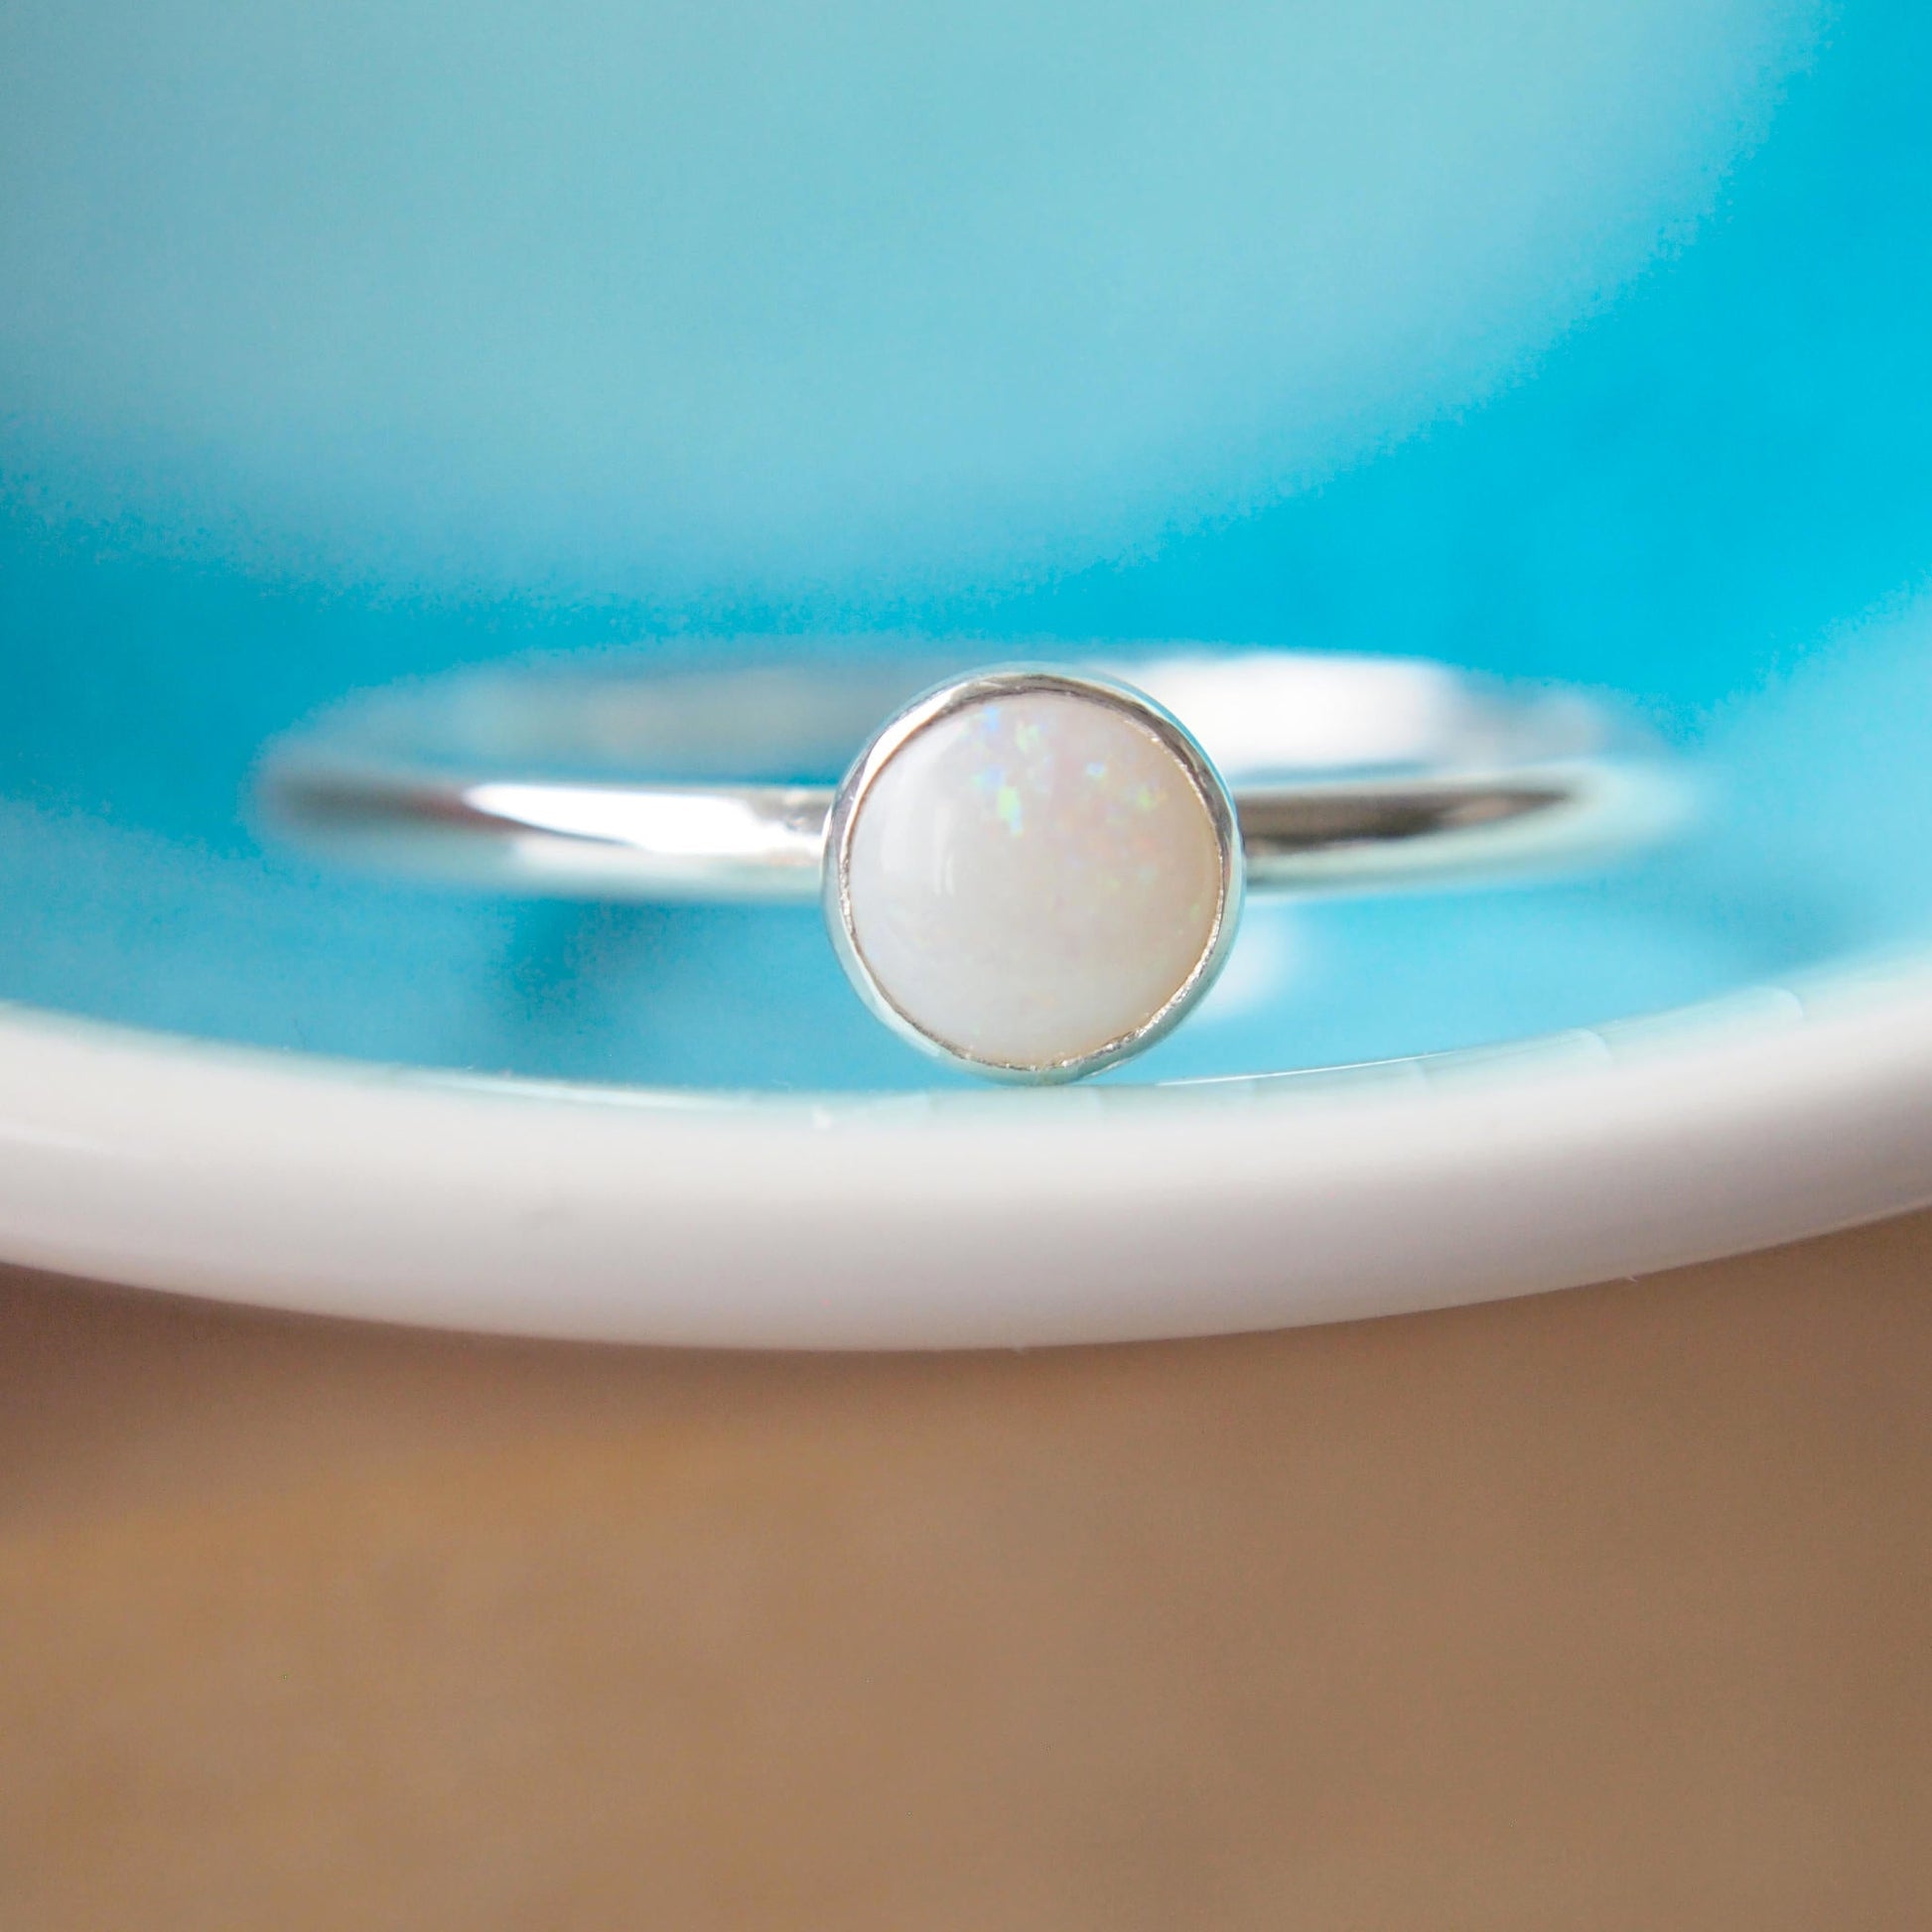 White Opal modern solitaire ring in Sterling Silver. Jewellery Handmade in Scotland UK by maram jewellery